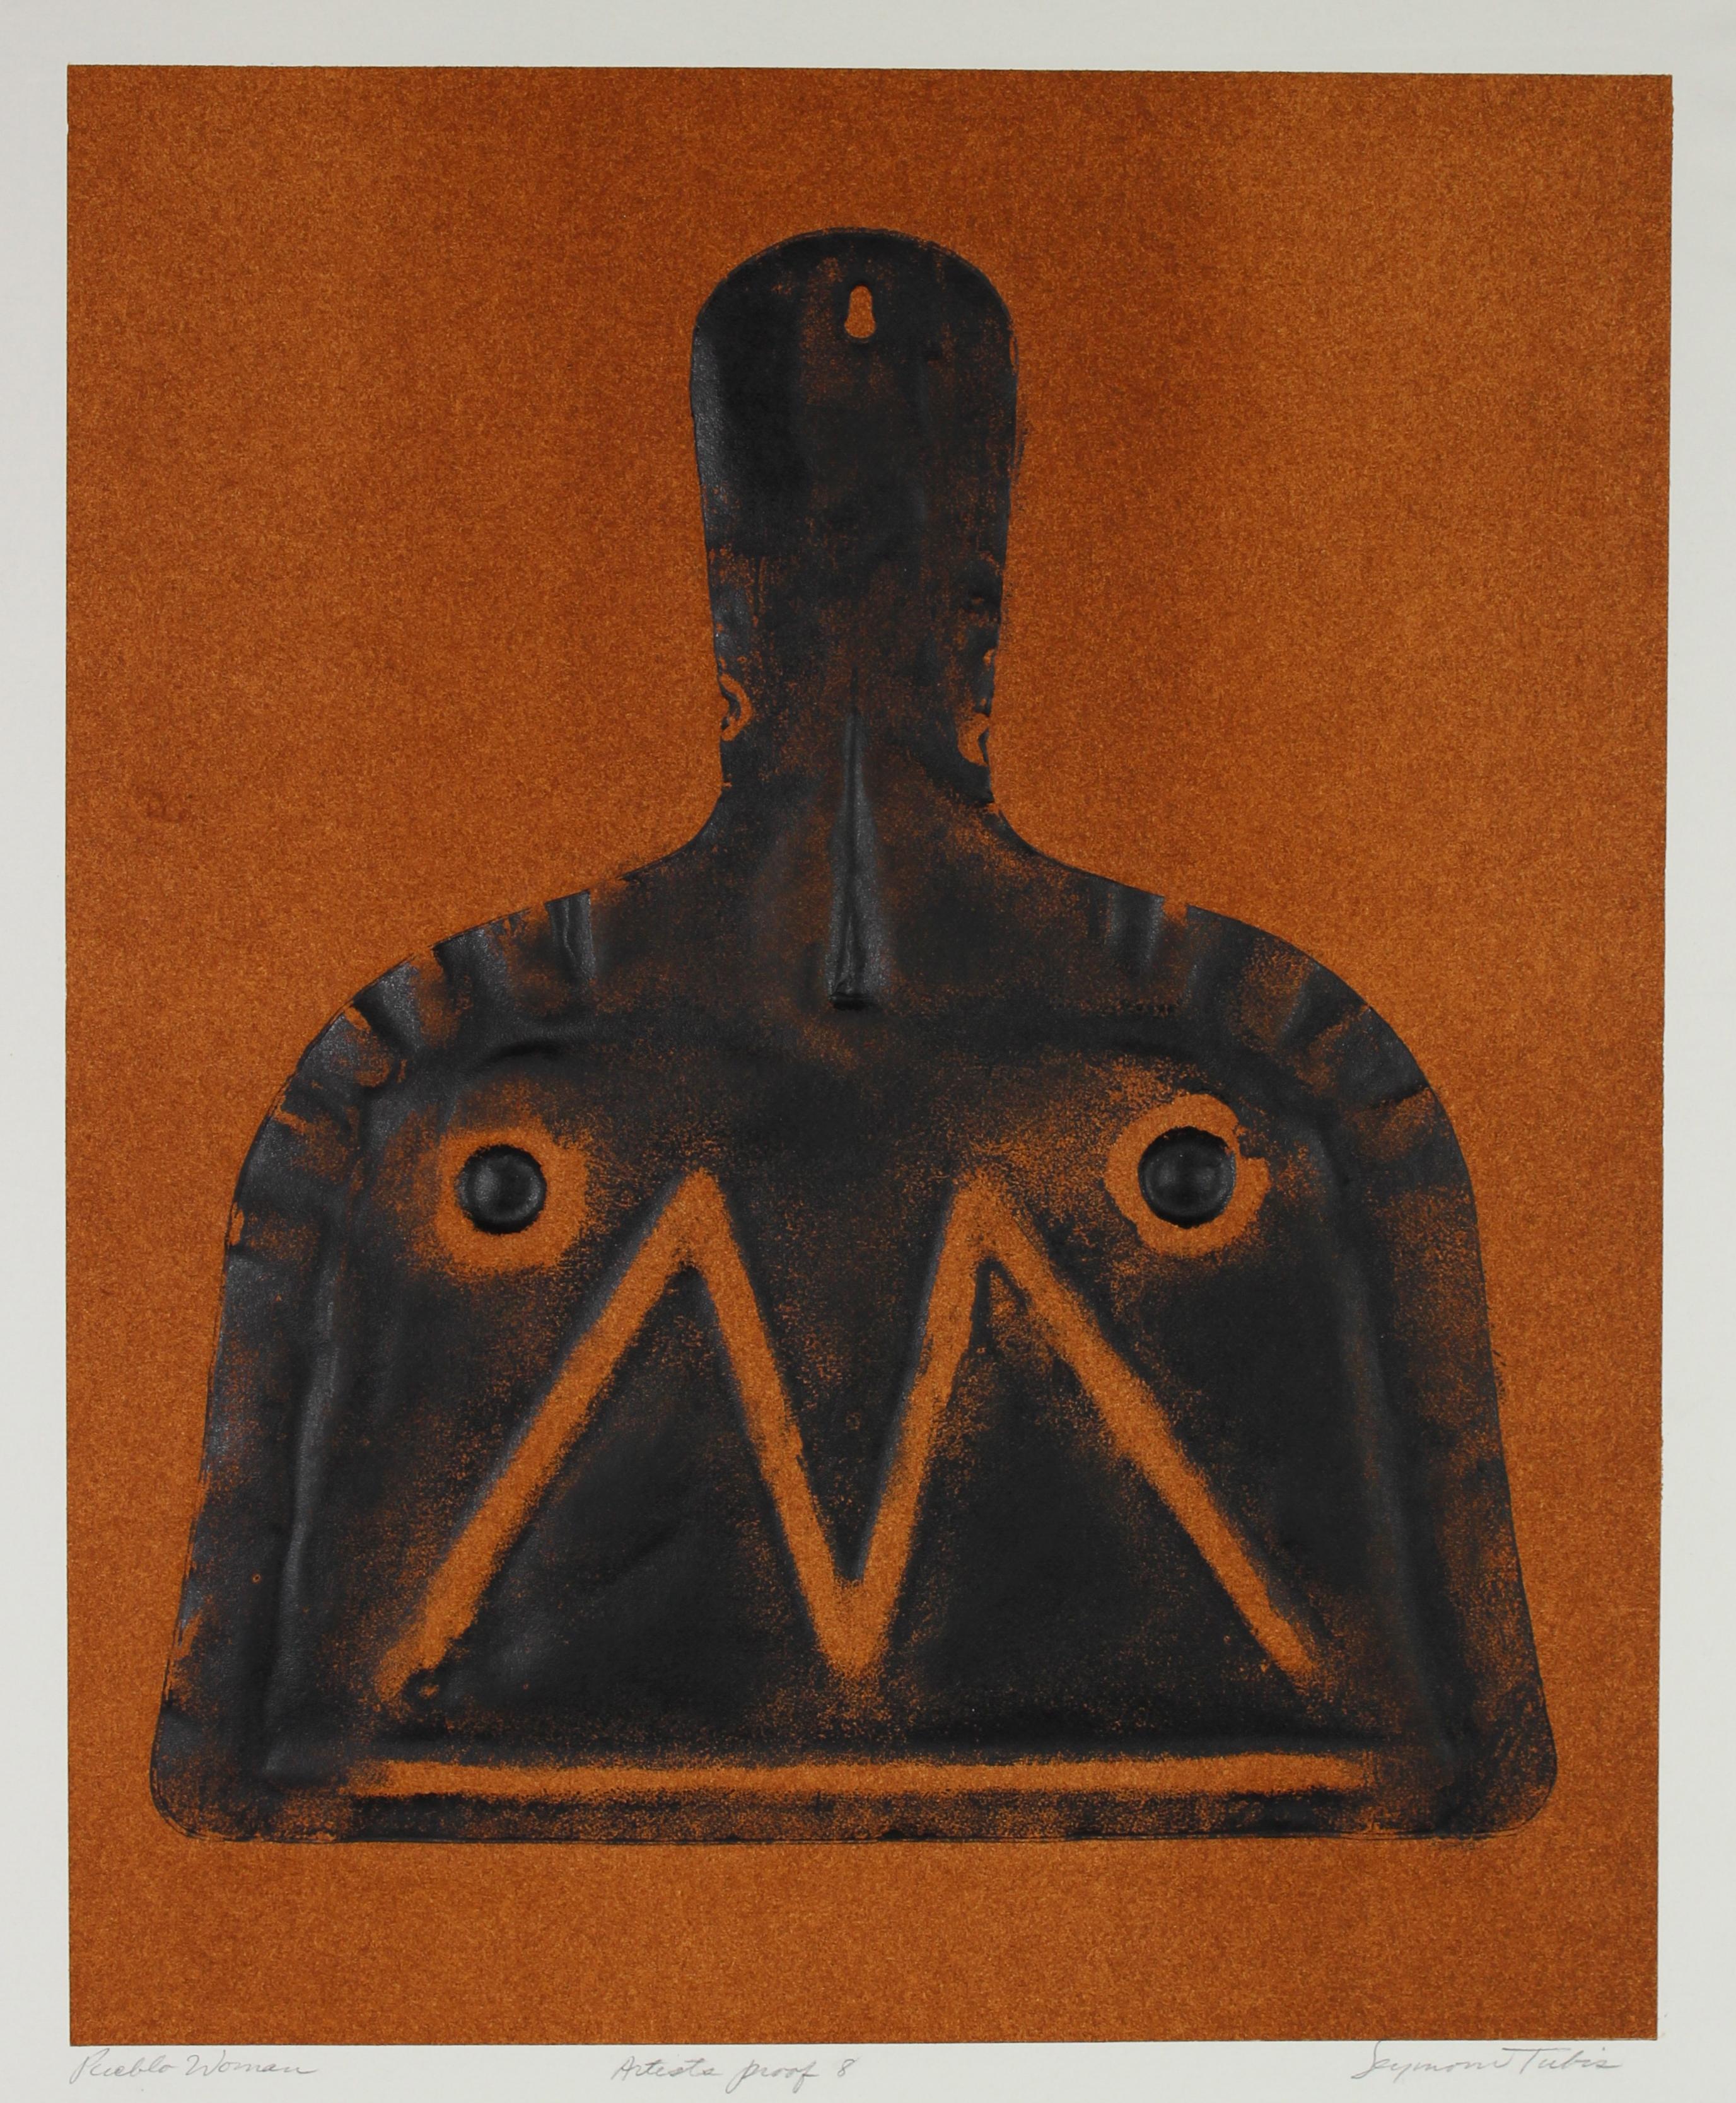 Seymour Tubis Portrait Print - "Pueblo Woman" Collograph on Paper in Rust Orange